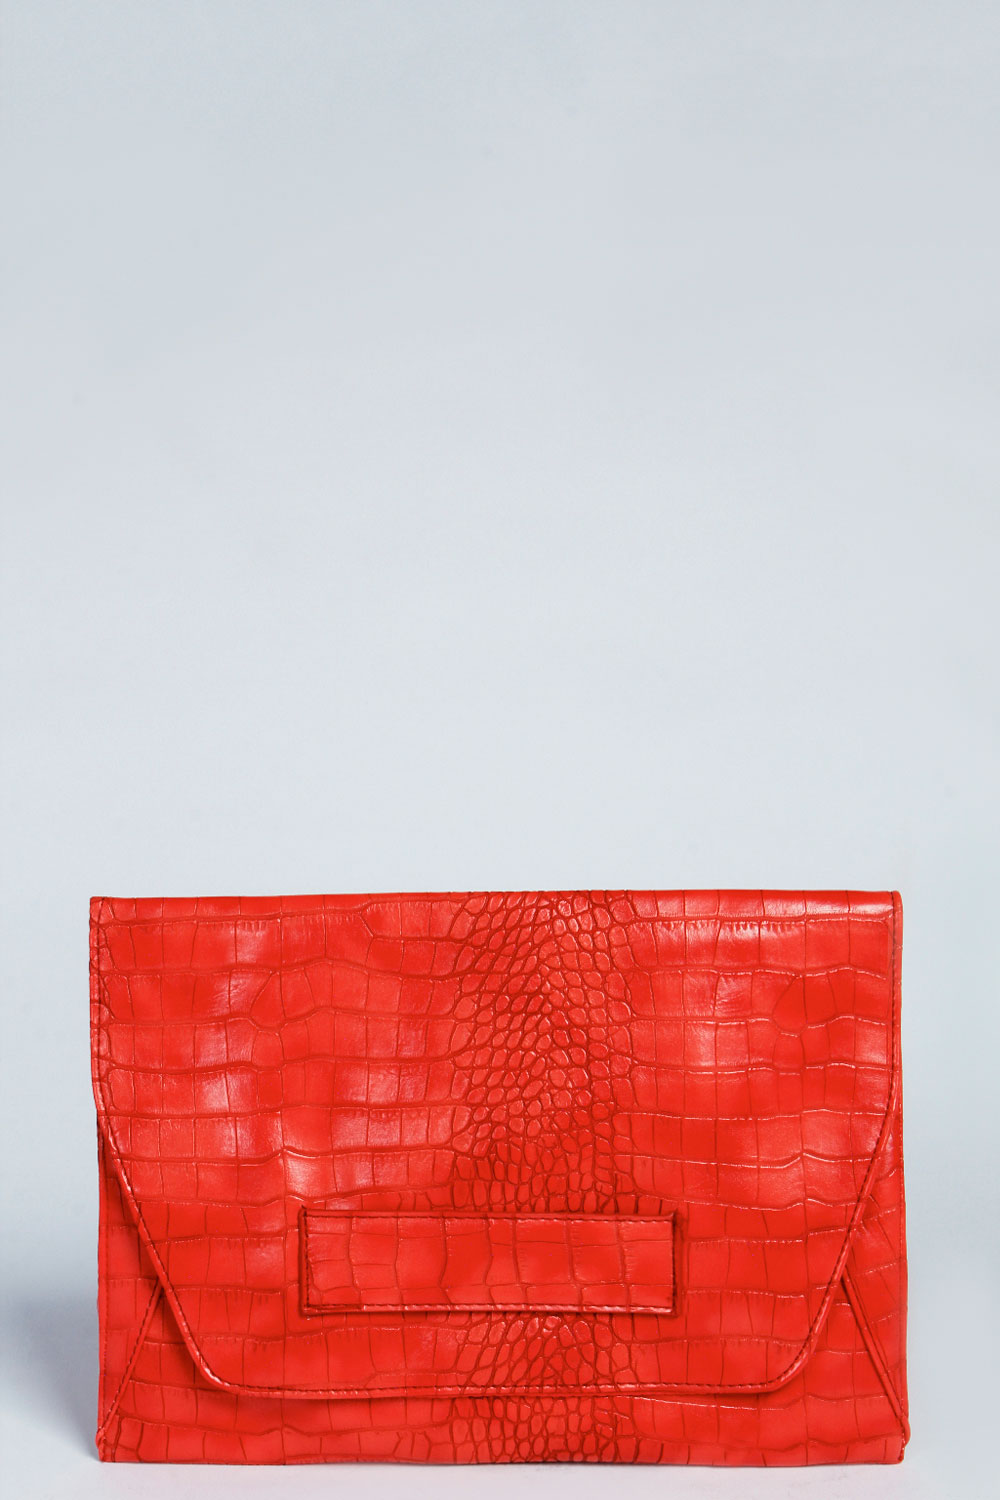 Lola Croc Handle Strap Clutch Bag - red,